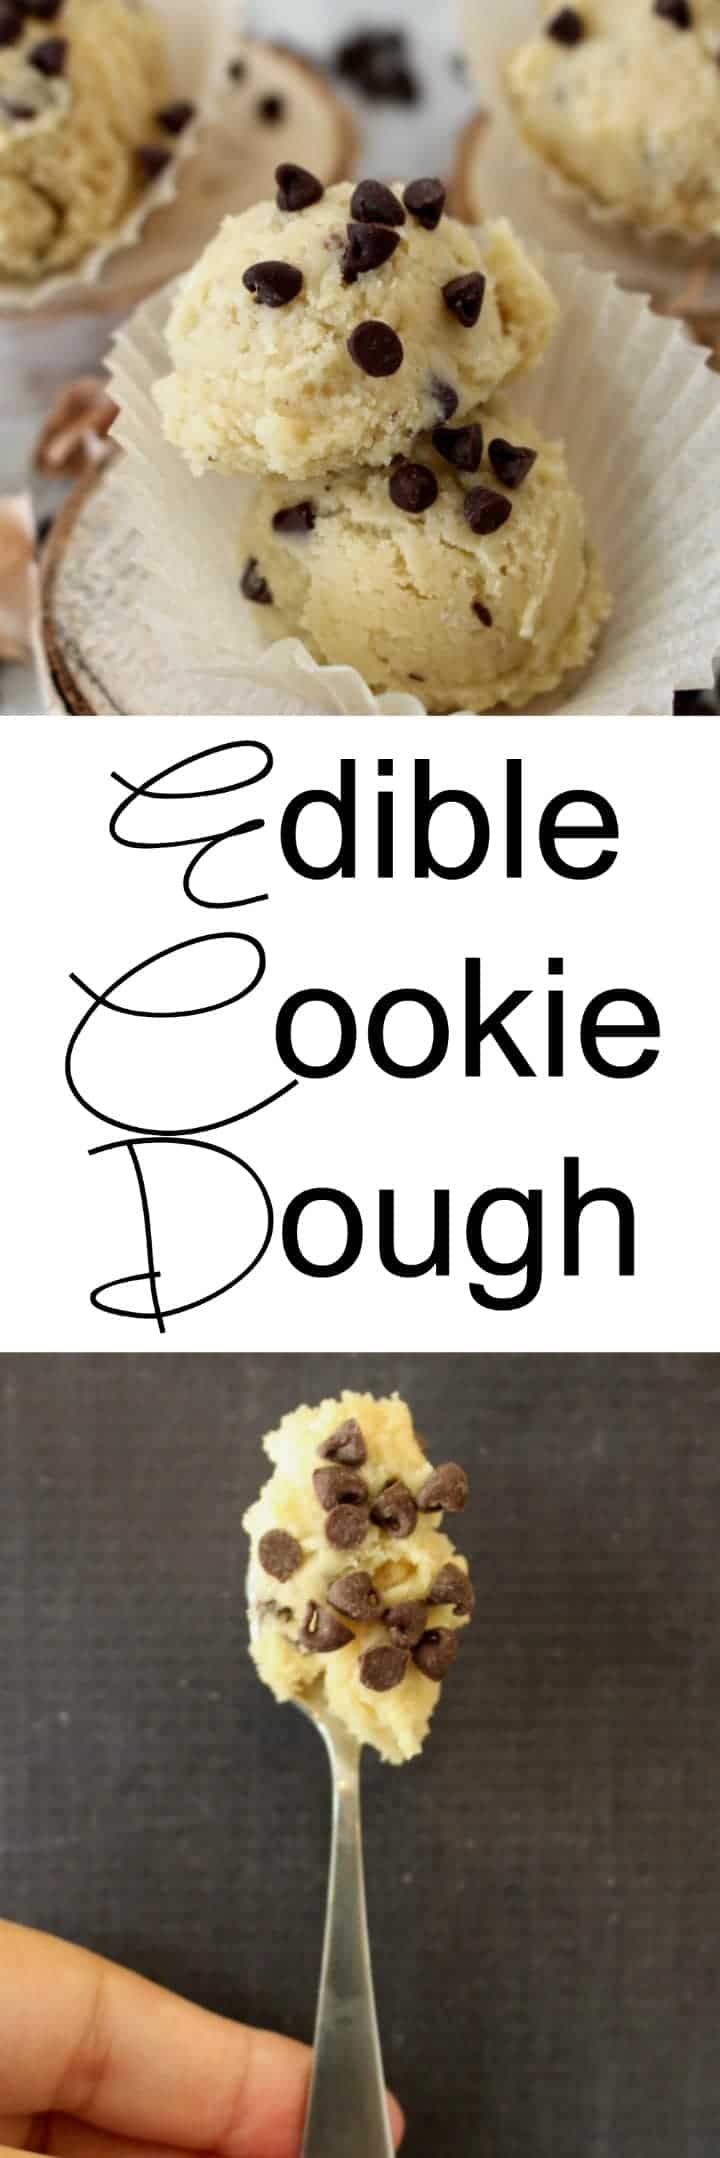 A Pinterest image for edible cookie dough